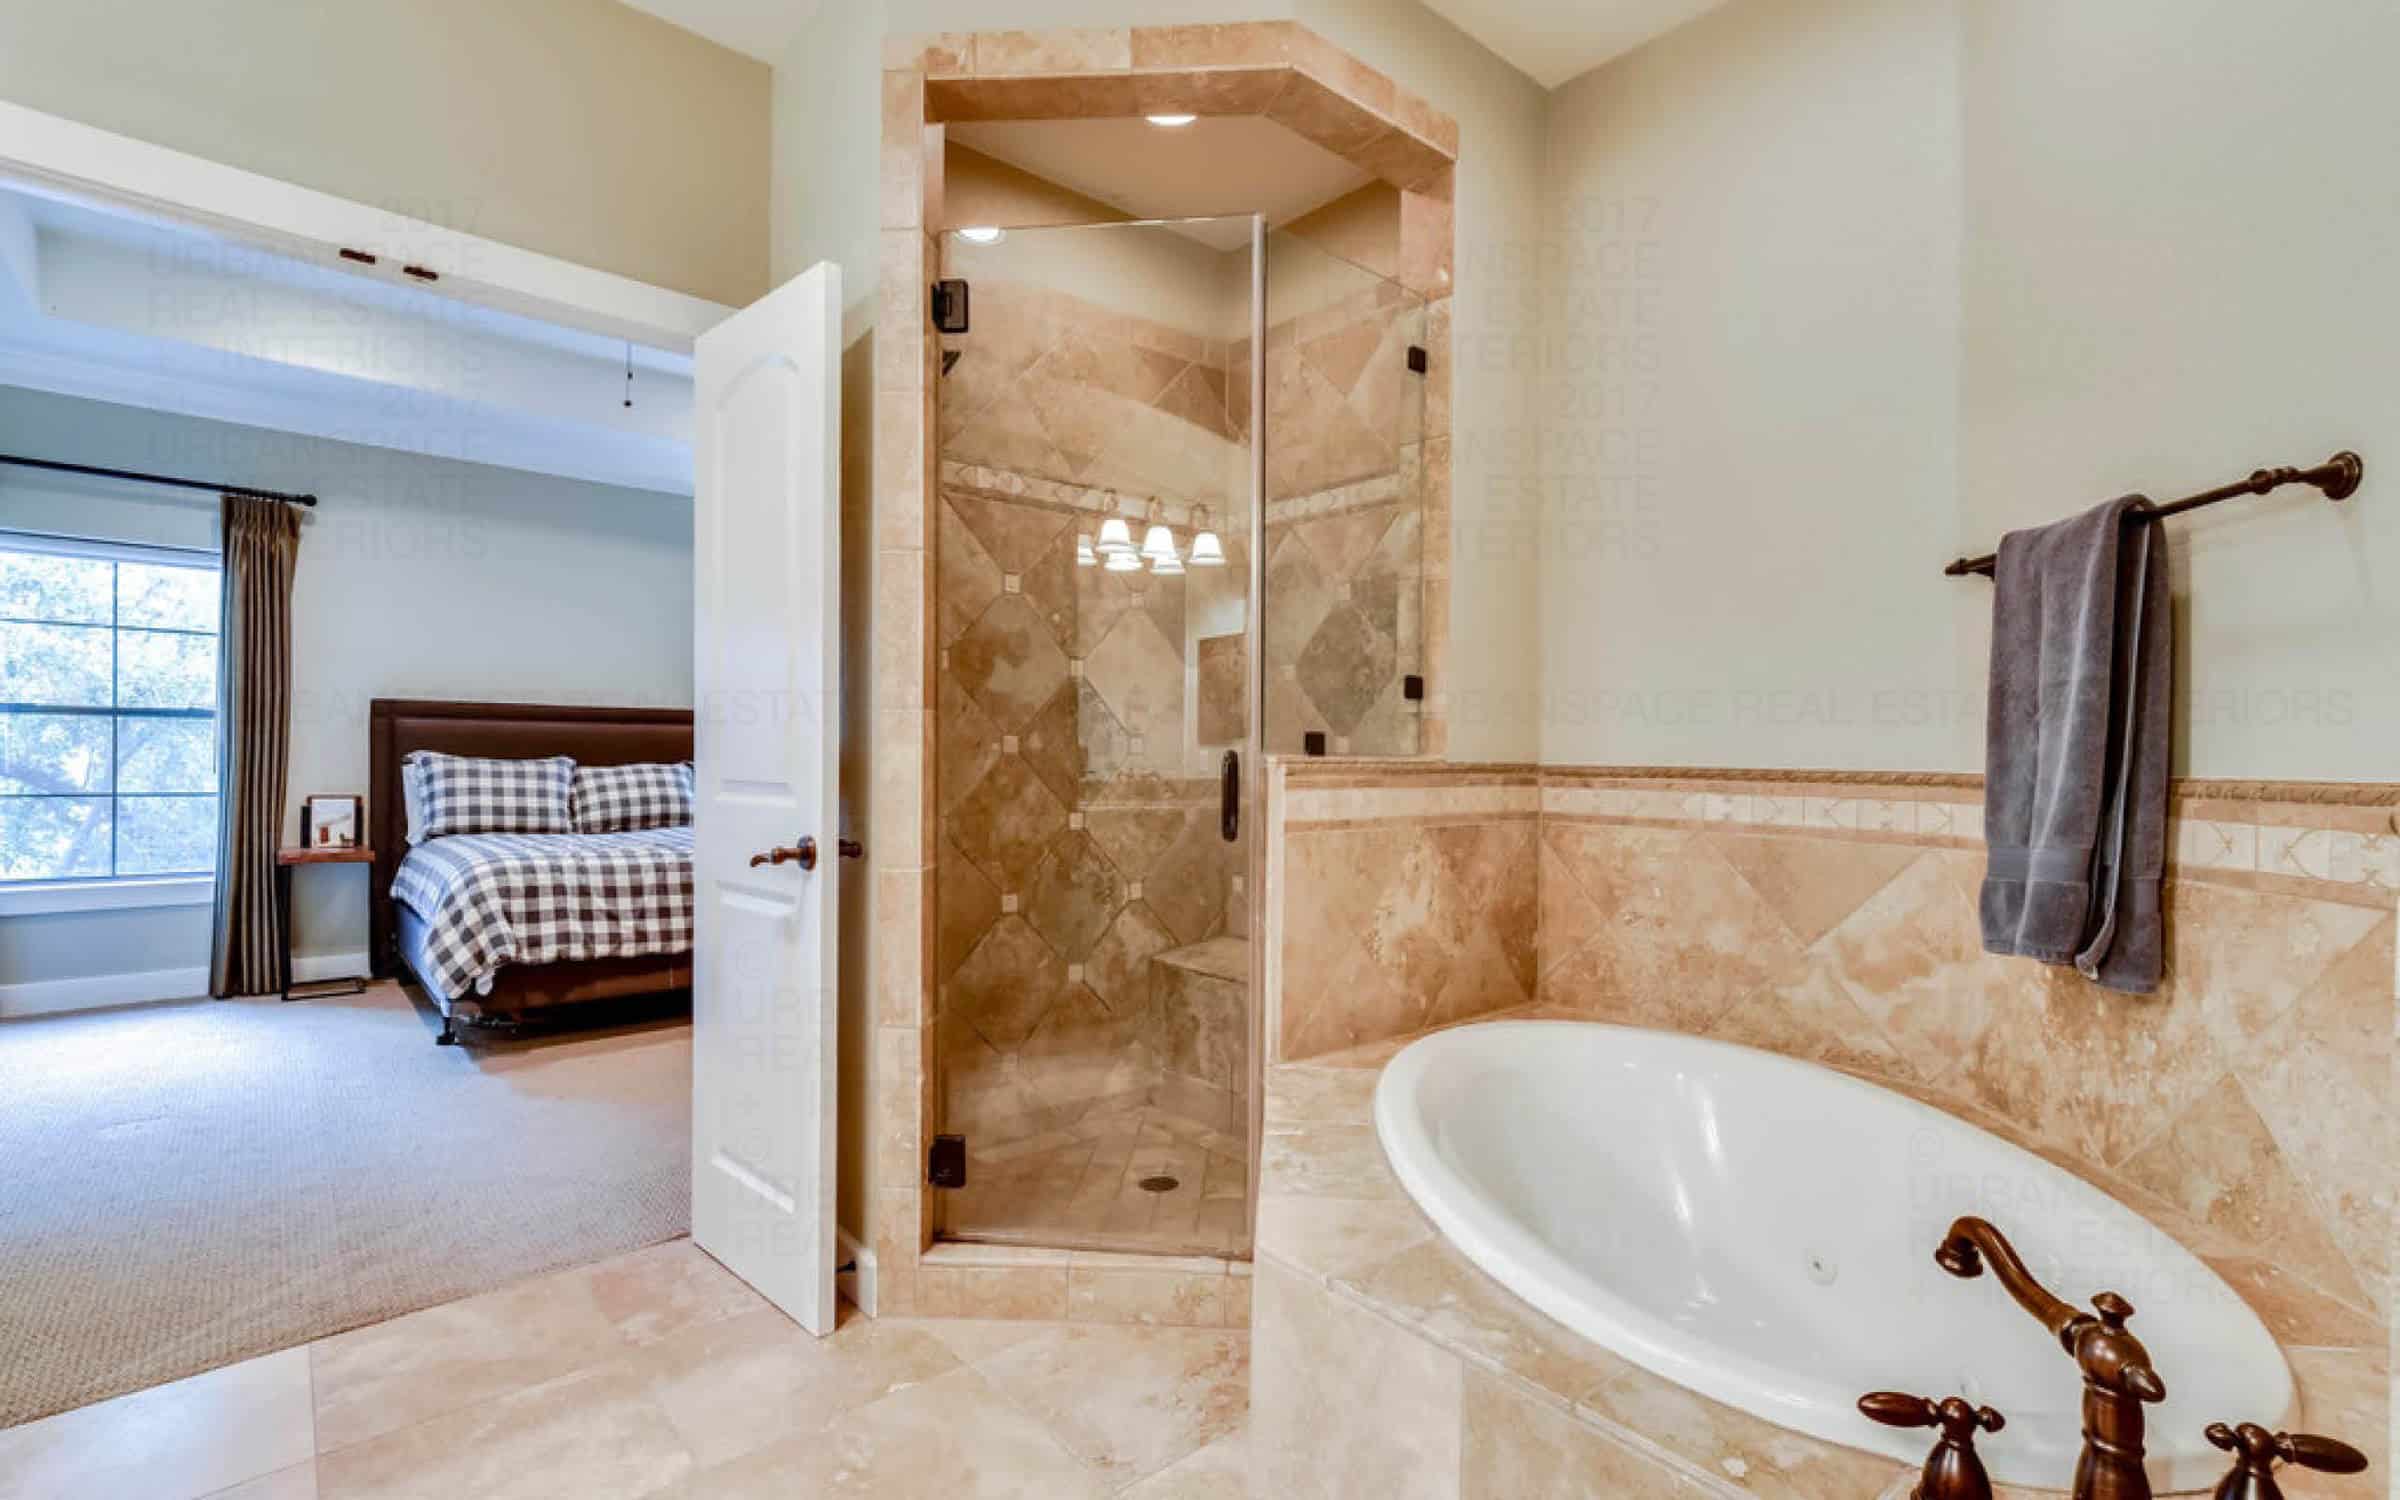 walkin shower tile tub open spacious bathroom liberty park austin